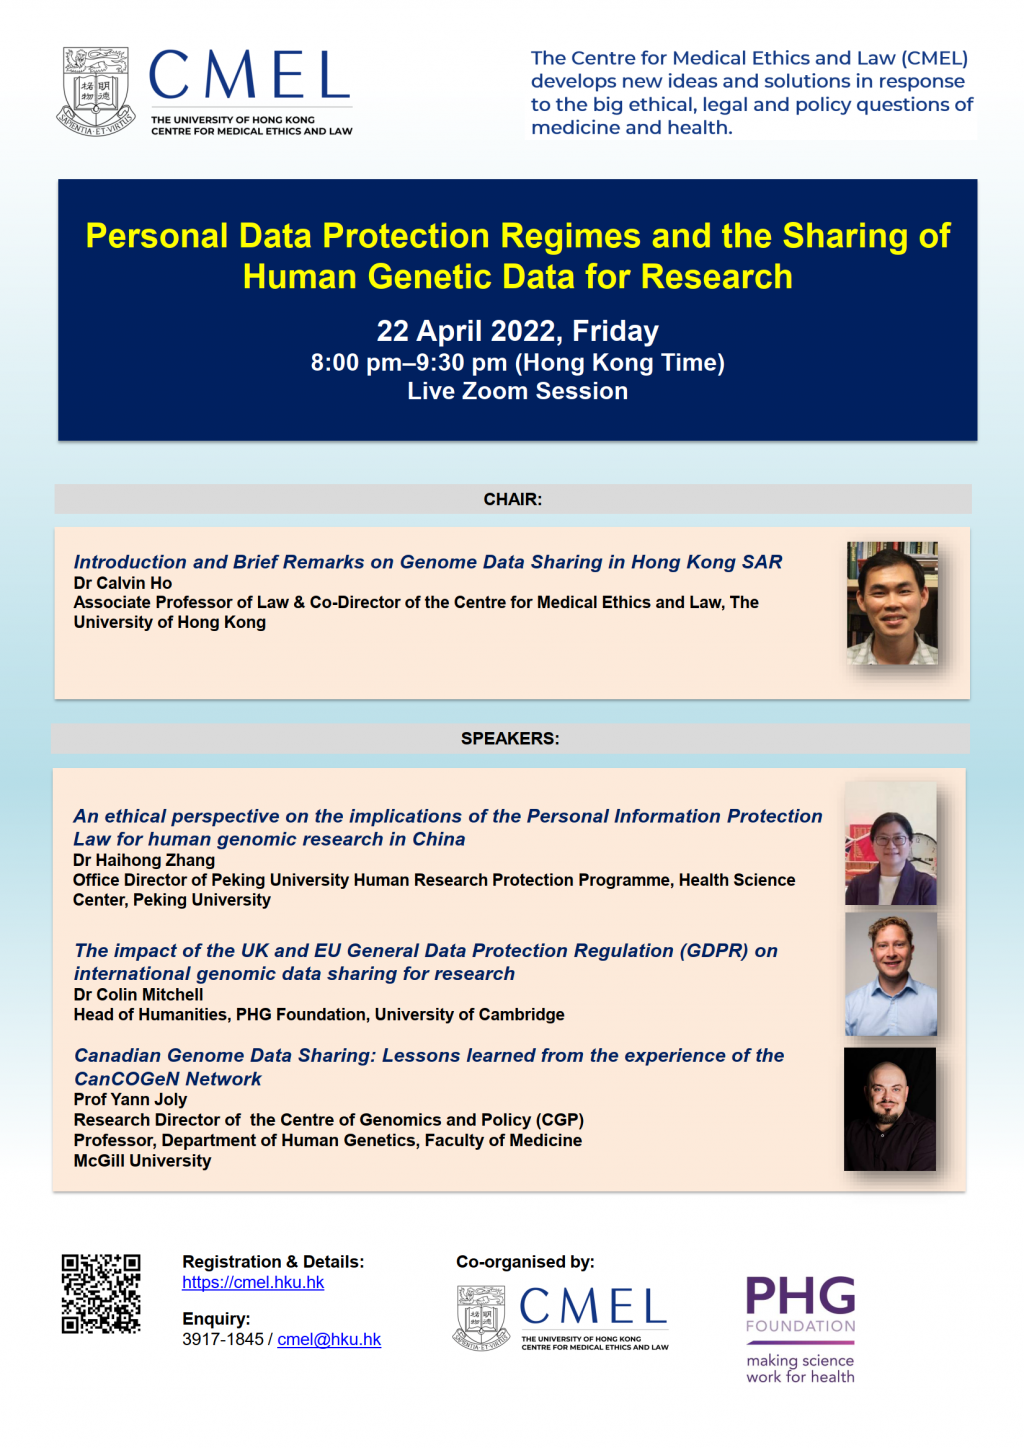 Data Protection & Genetic Data